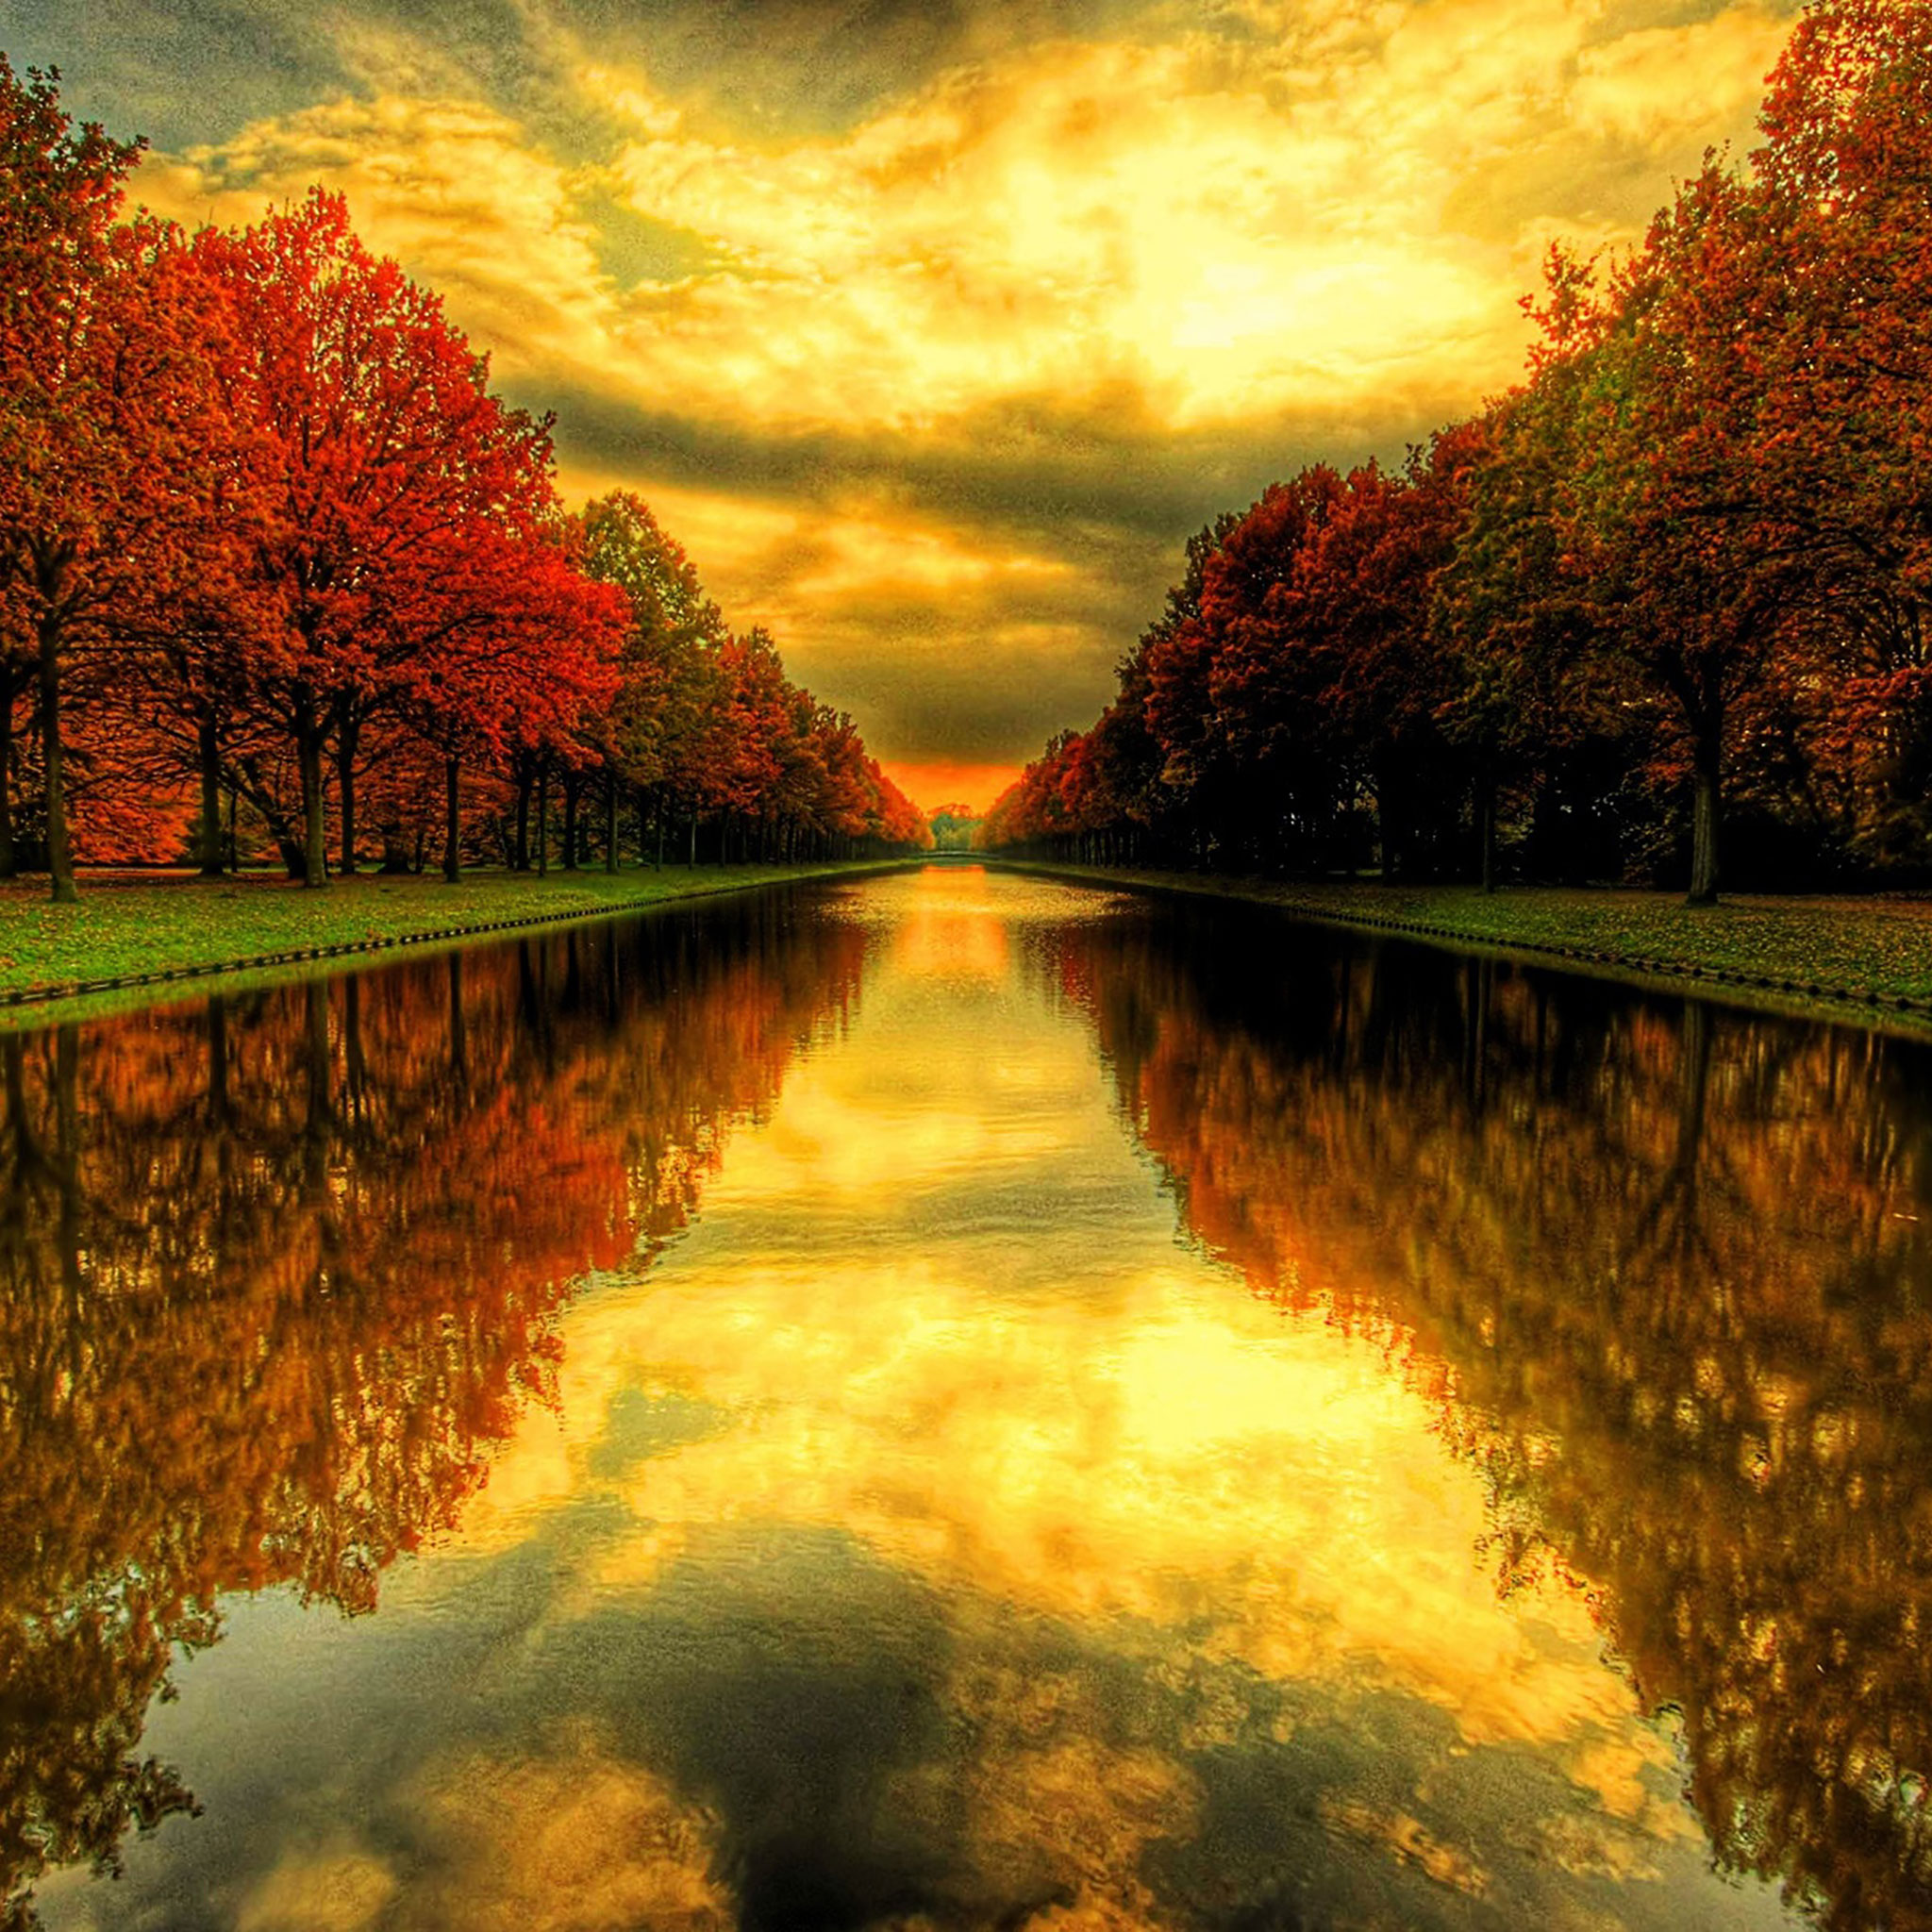 autumn ipad wallpaper,natural landscape,reflection,nature,sky,tree